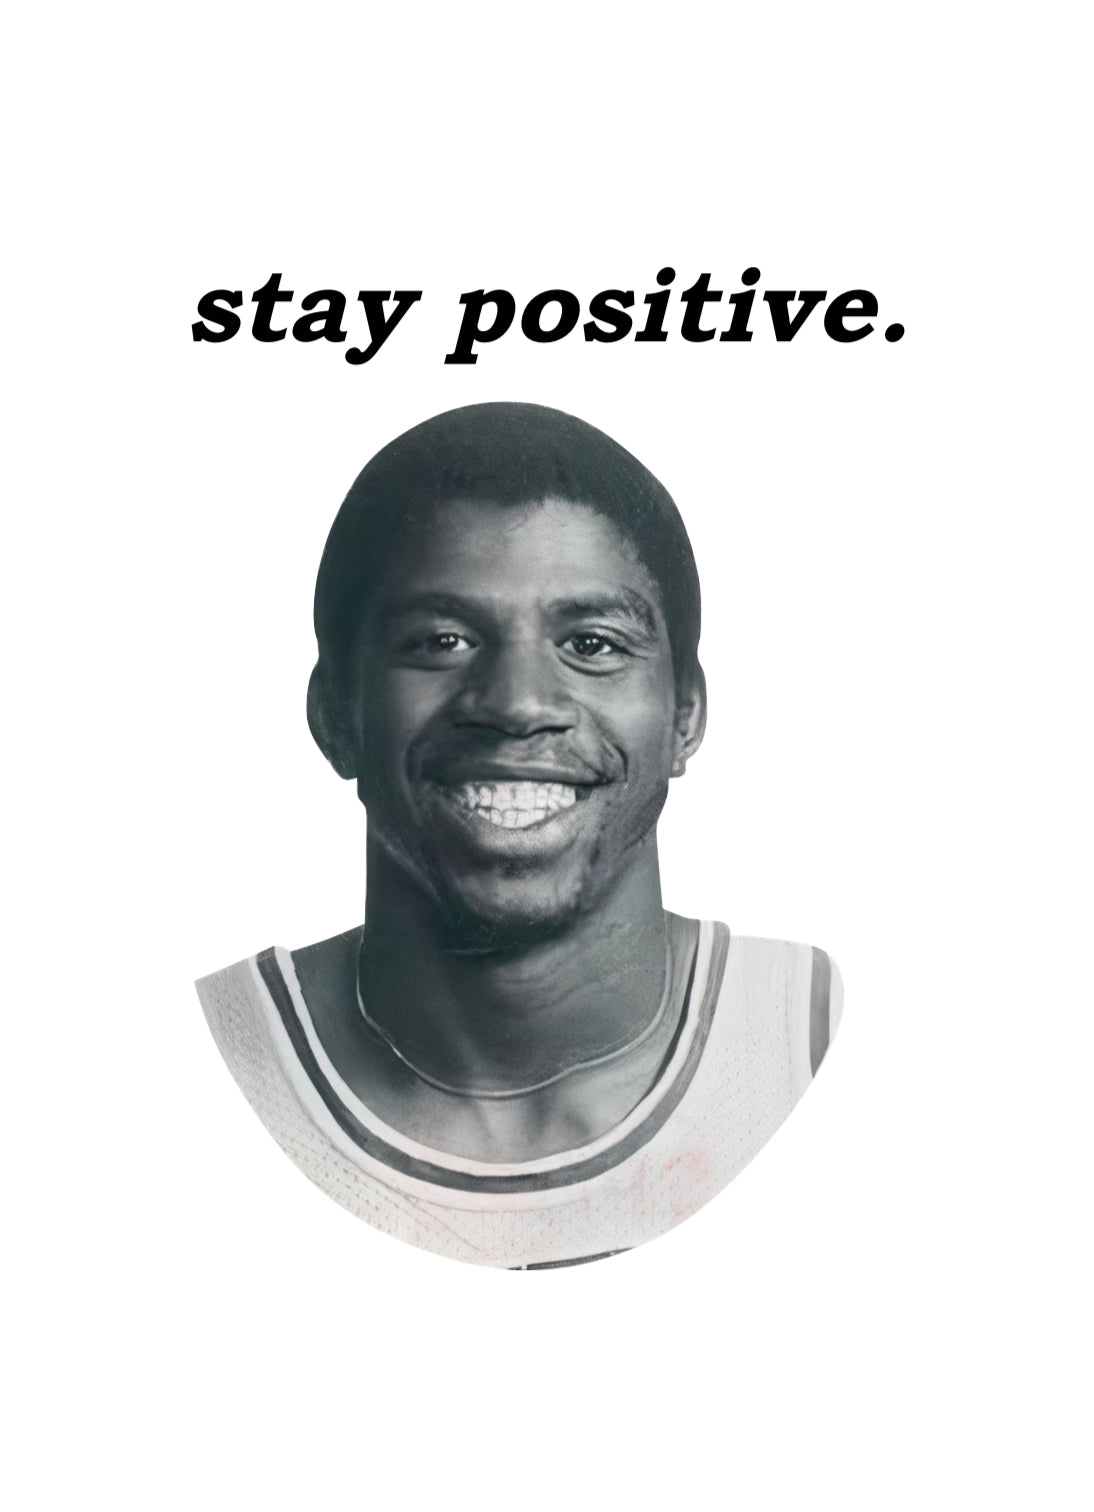 Magic - stay positive t shirt